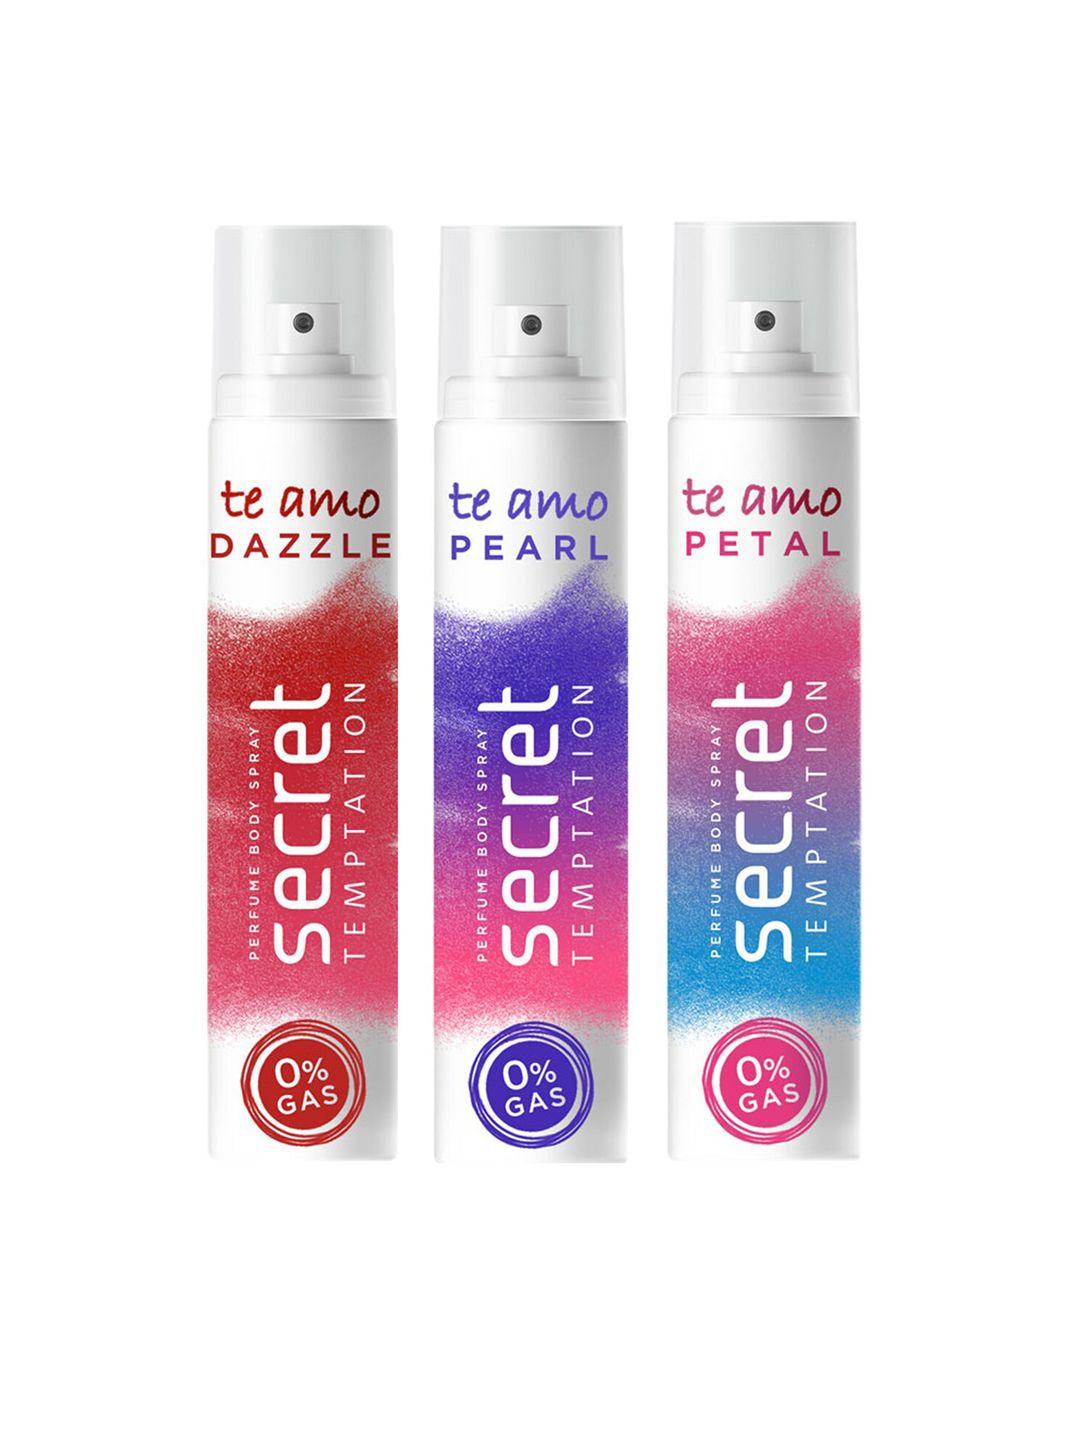 secret temptation women set of 3 te amo dazzle, pearl & petal perfume body spray - 120ml